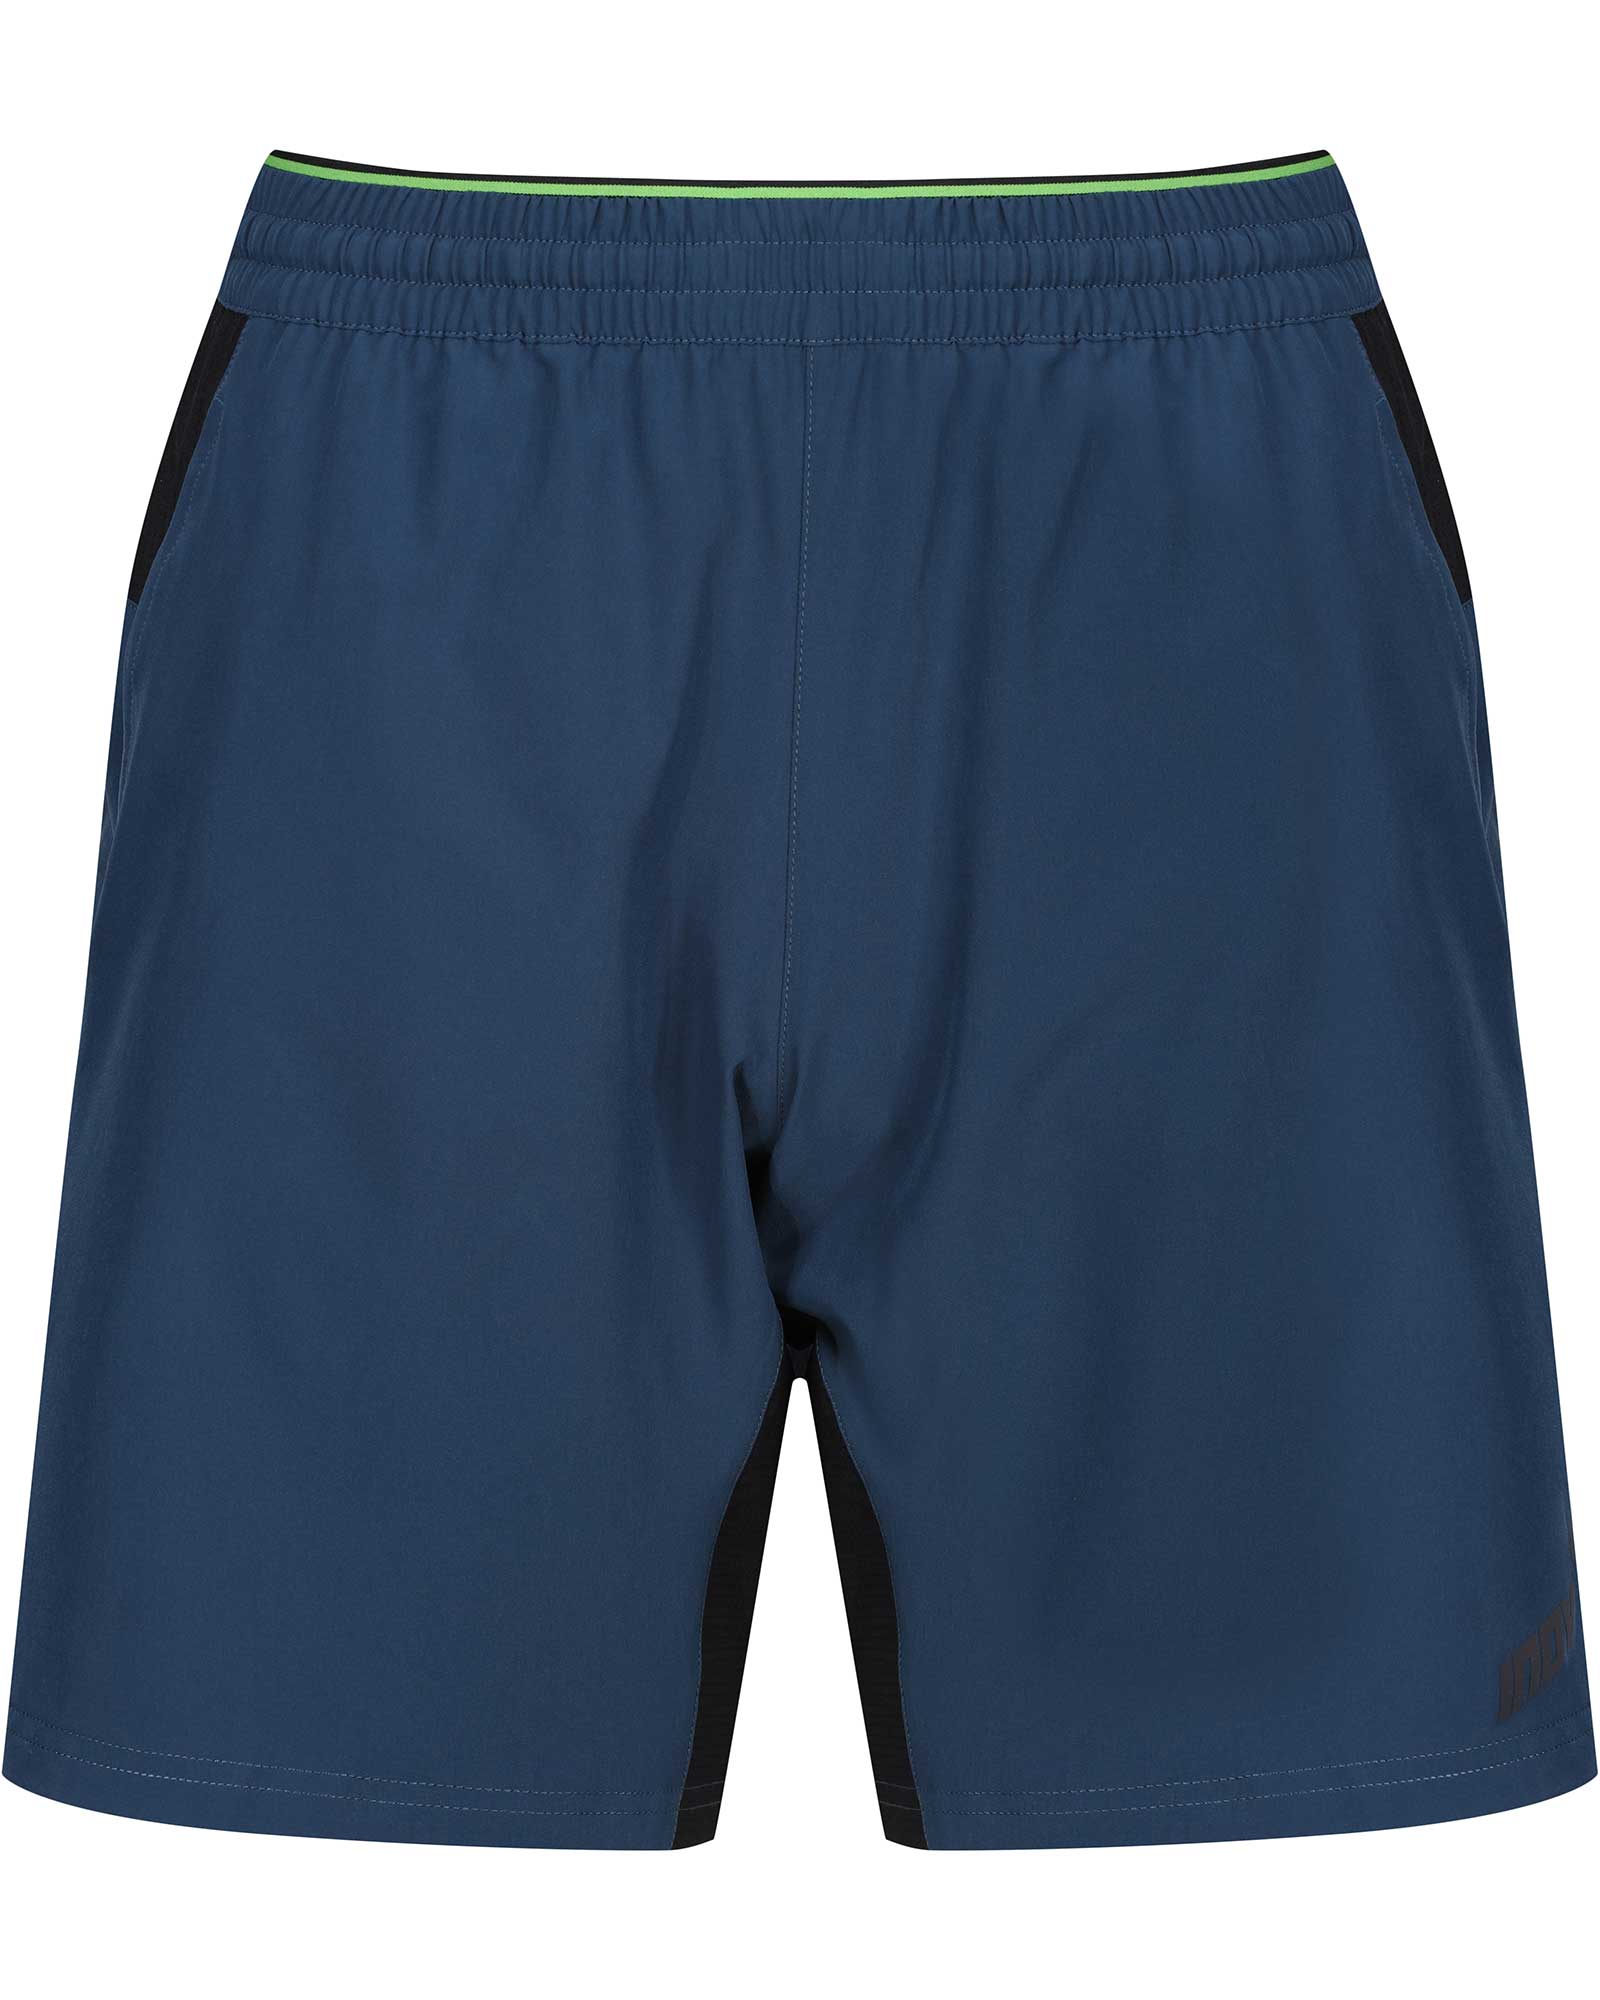 Inov 8 Train Lite Men’s 9" Shorts - Navy XL